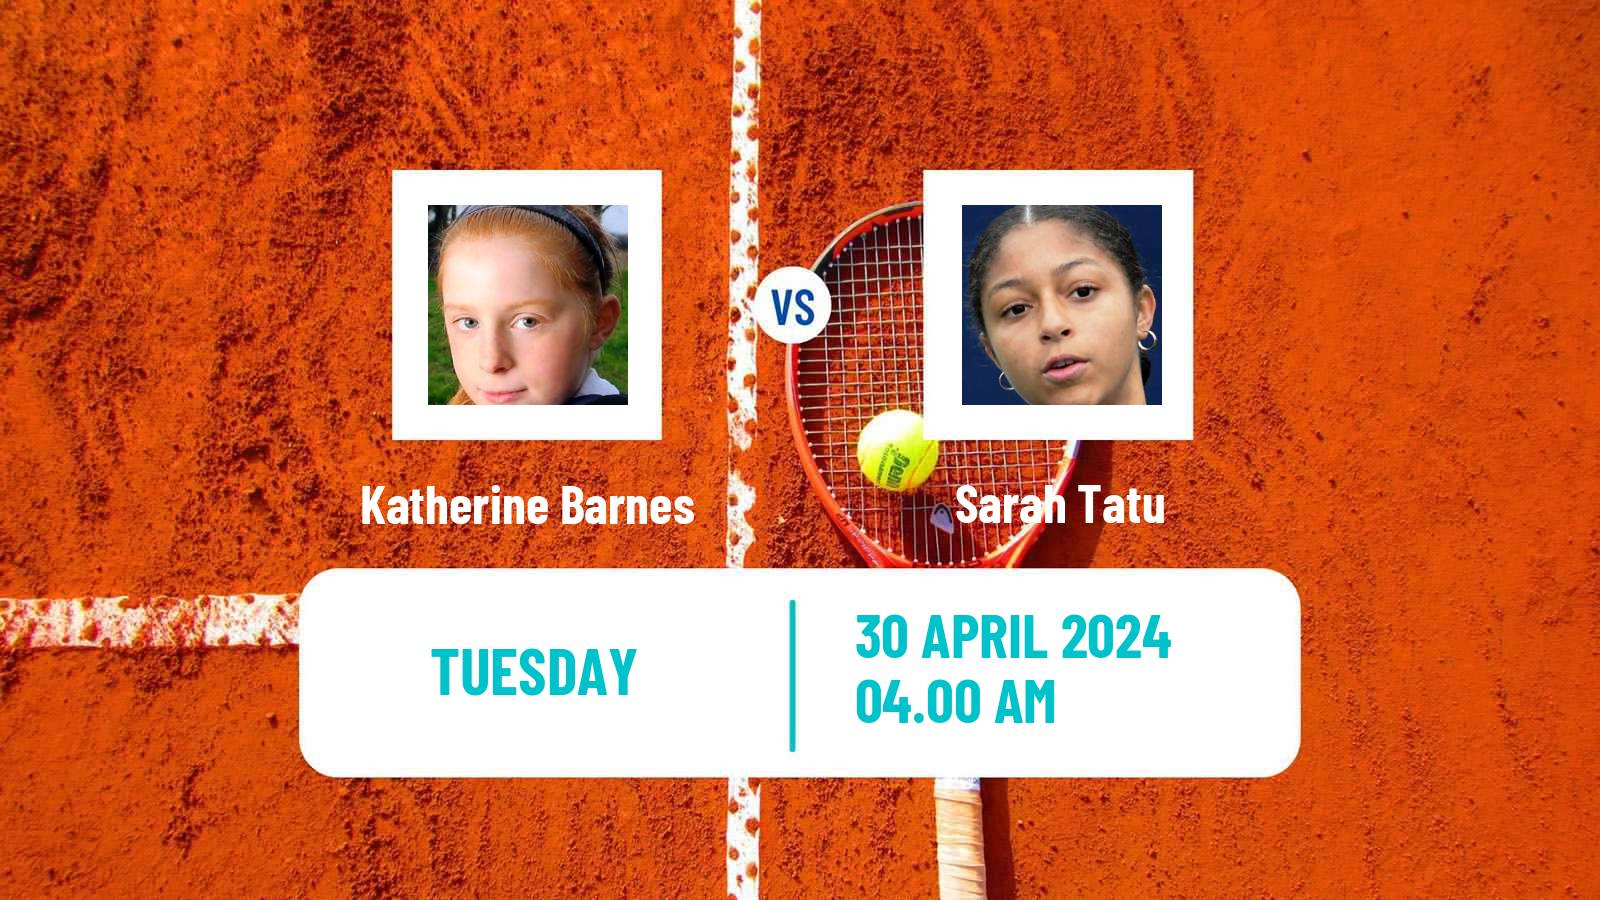 Tennis ITF W35 Nottingham 2 Women Katherine Barnes - Sarah Tatu